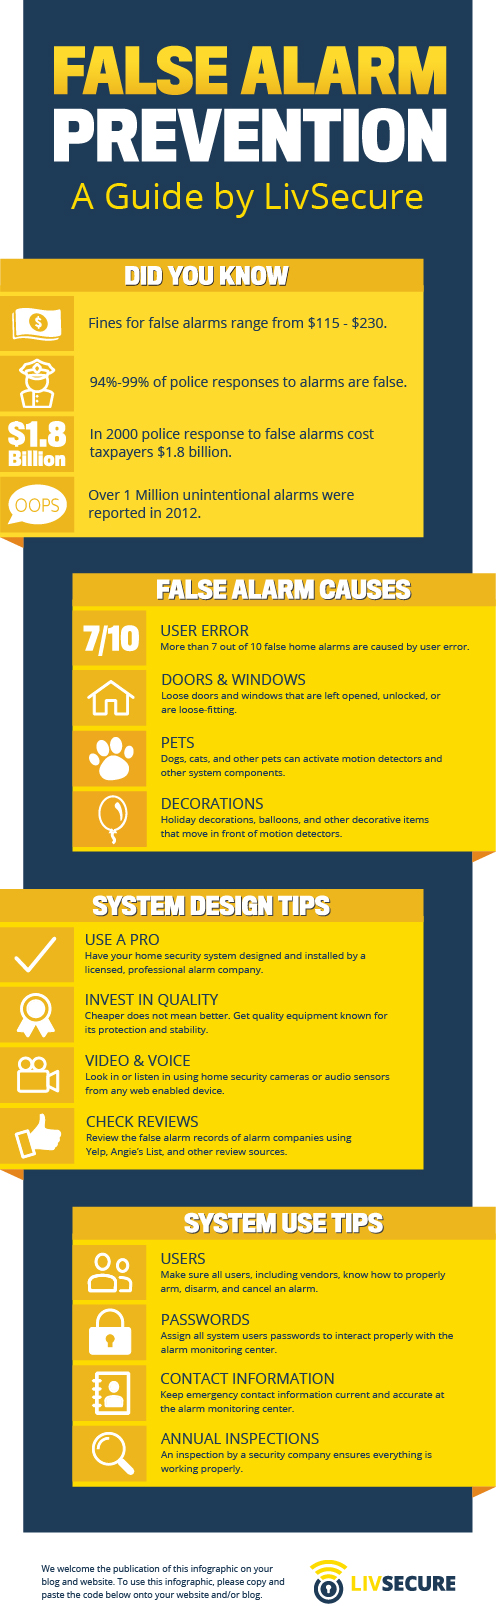 false-alarm-prevention-infographic-plaza